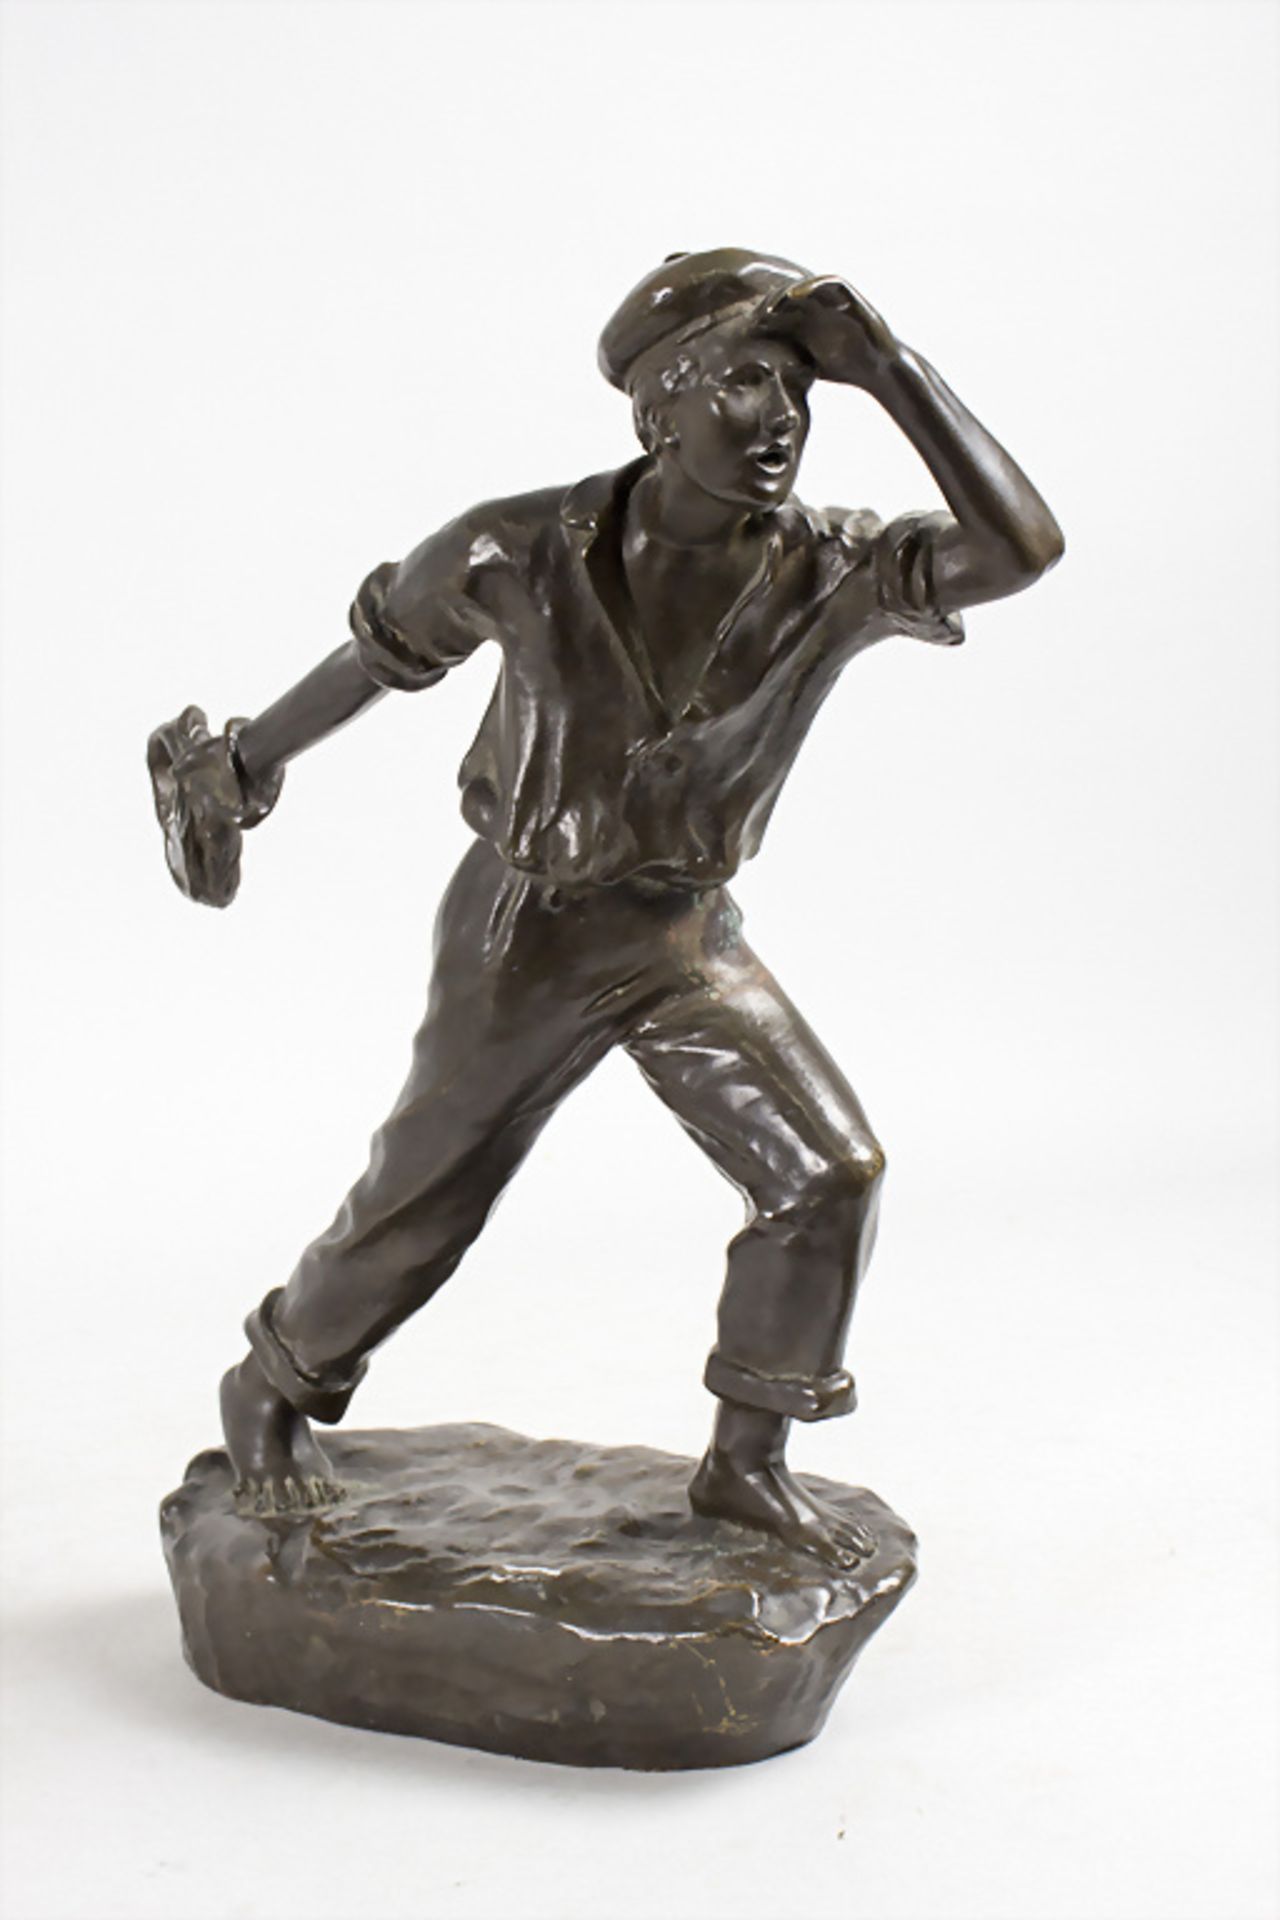 Arthur PUYT (1873-1955), Bronzeplastik 'Matrose' / A bronze sculpture 'Sailor', Belgien, um 1910